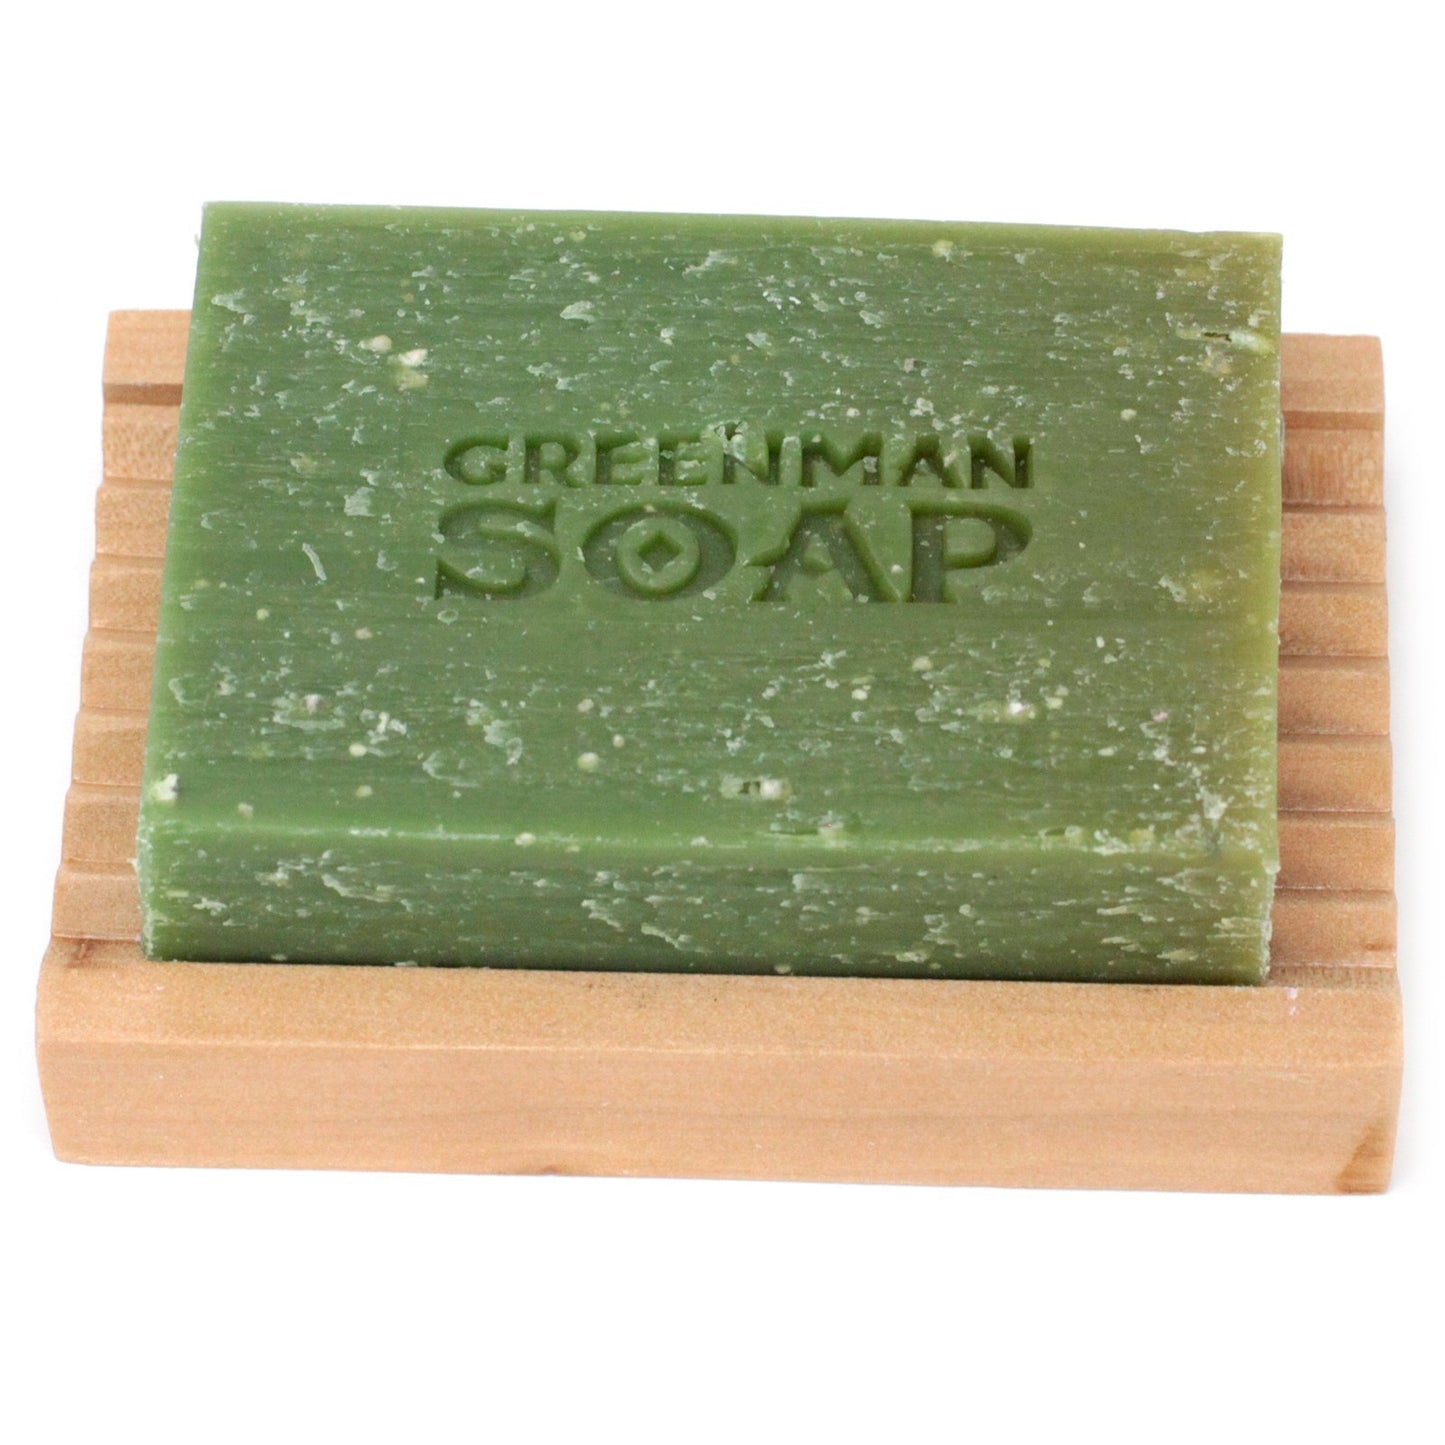 Greenman Soap 100g - Gardener's Scrub